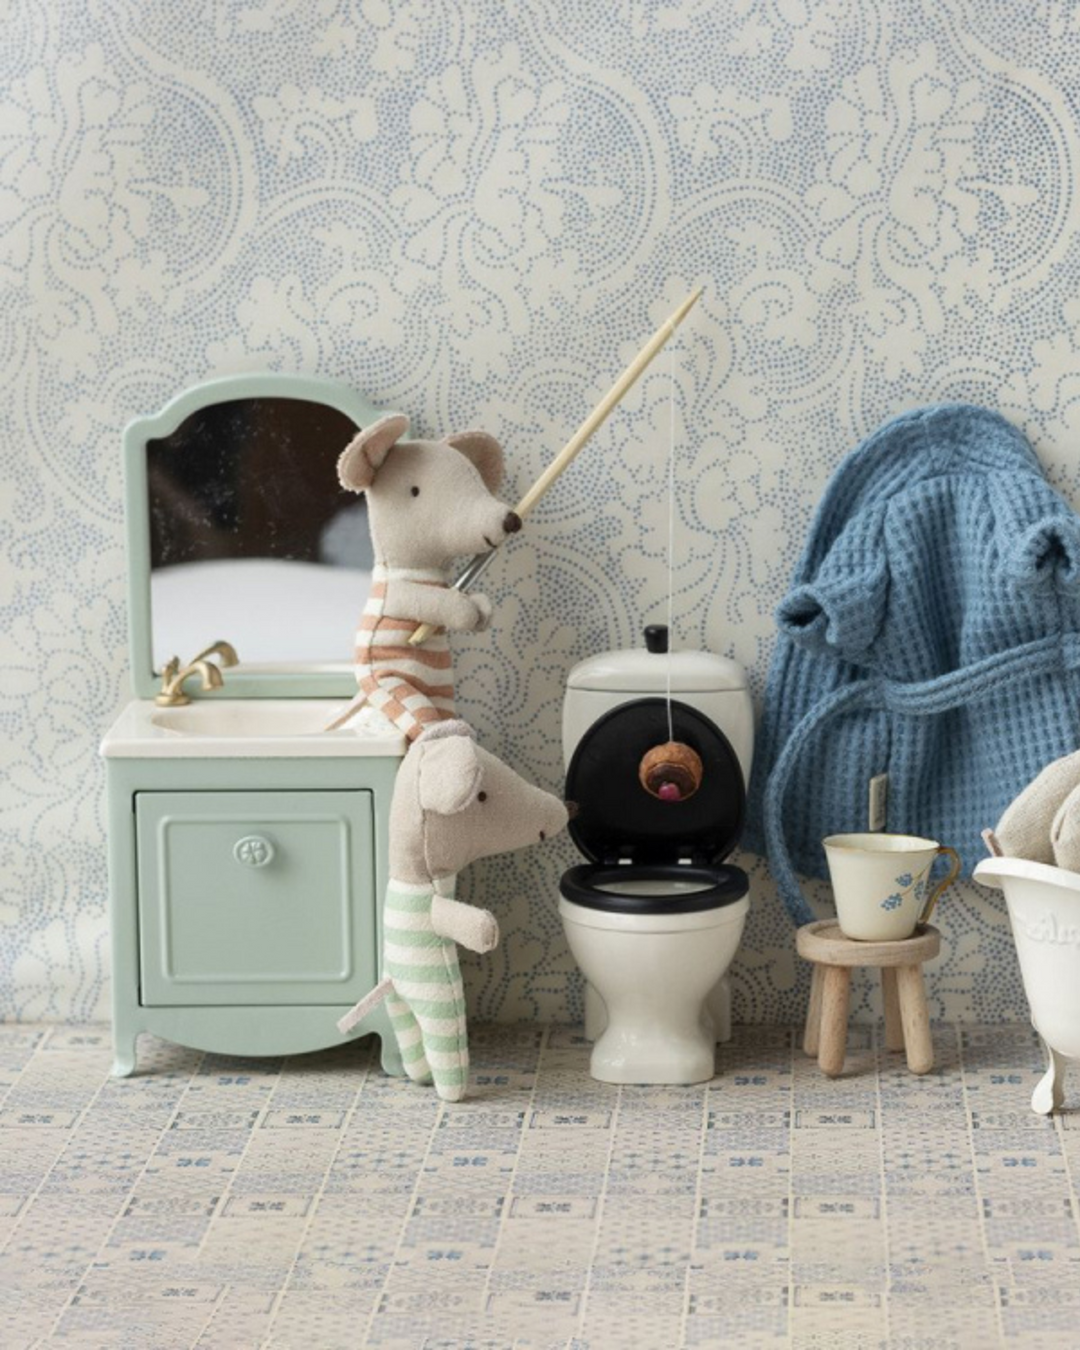 Dollhouse Bathroom Furniture: Maileg Mouse Mint Sink Dresser